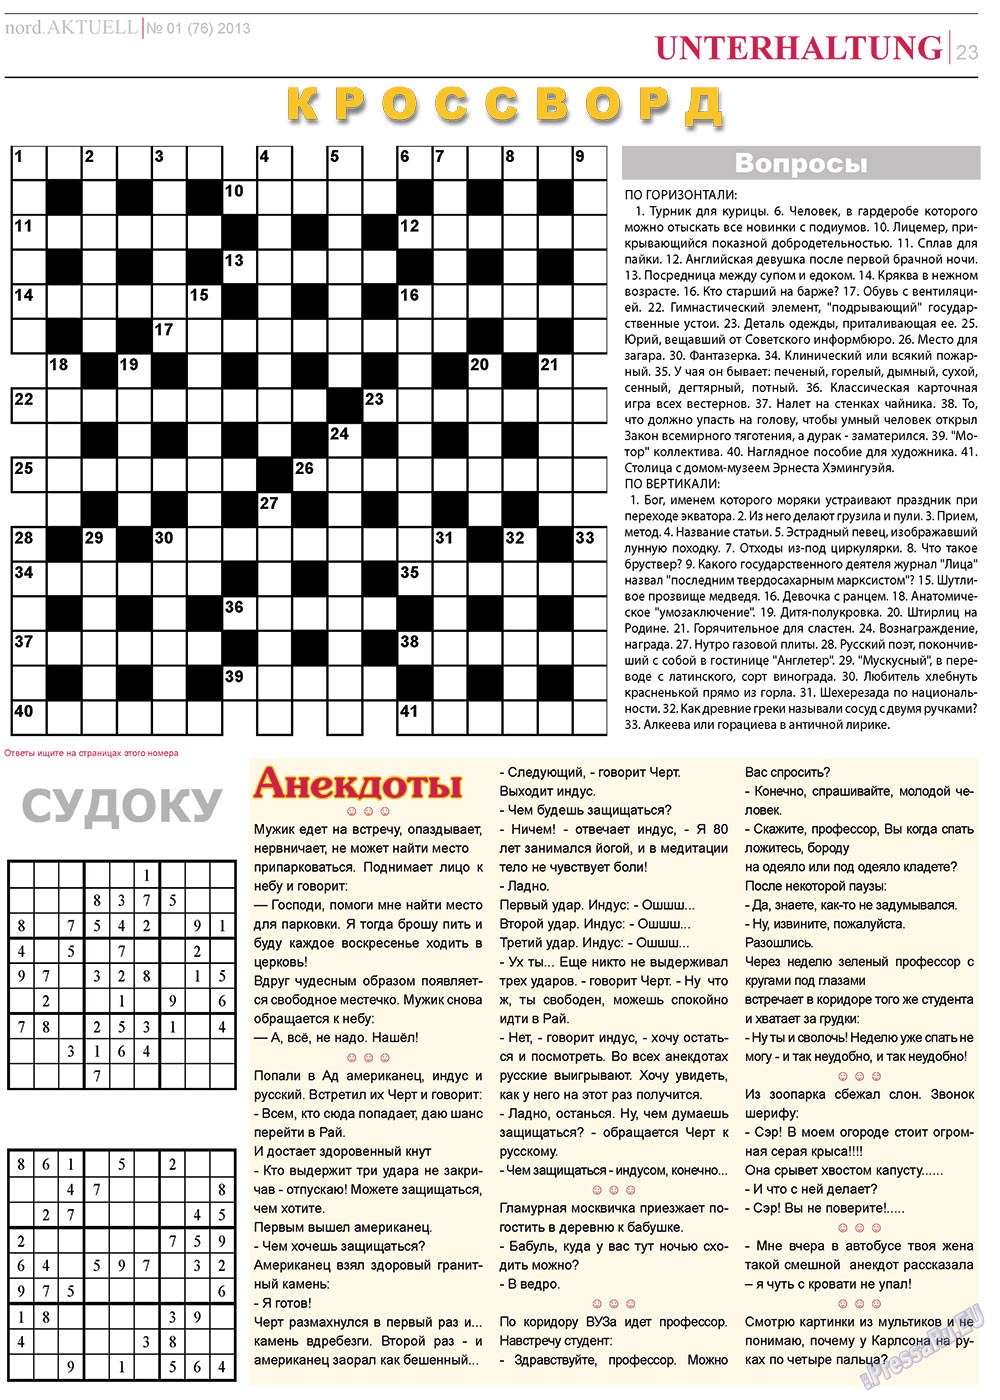 nord.Aktuell, газета. 2013 №1 стр.23